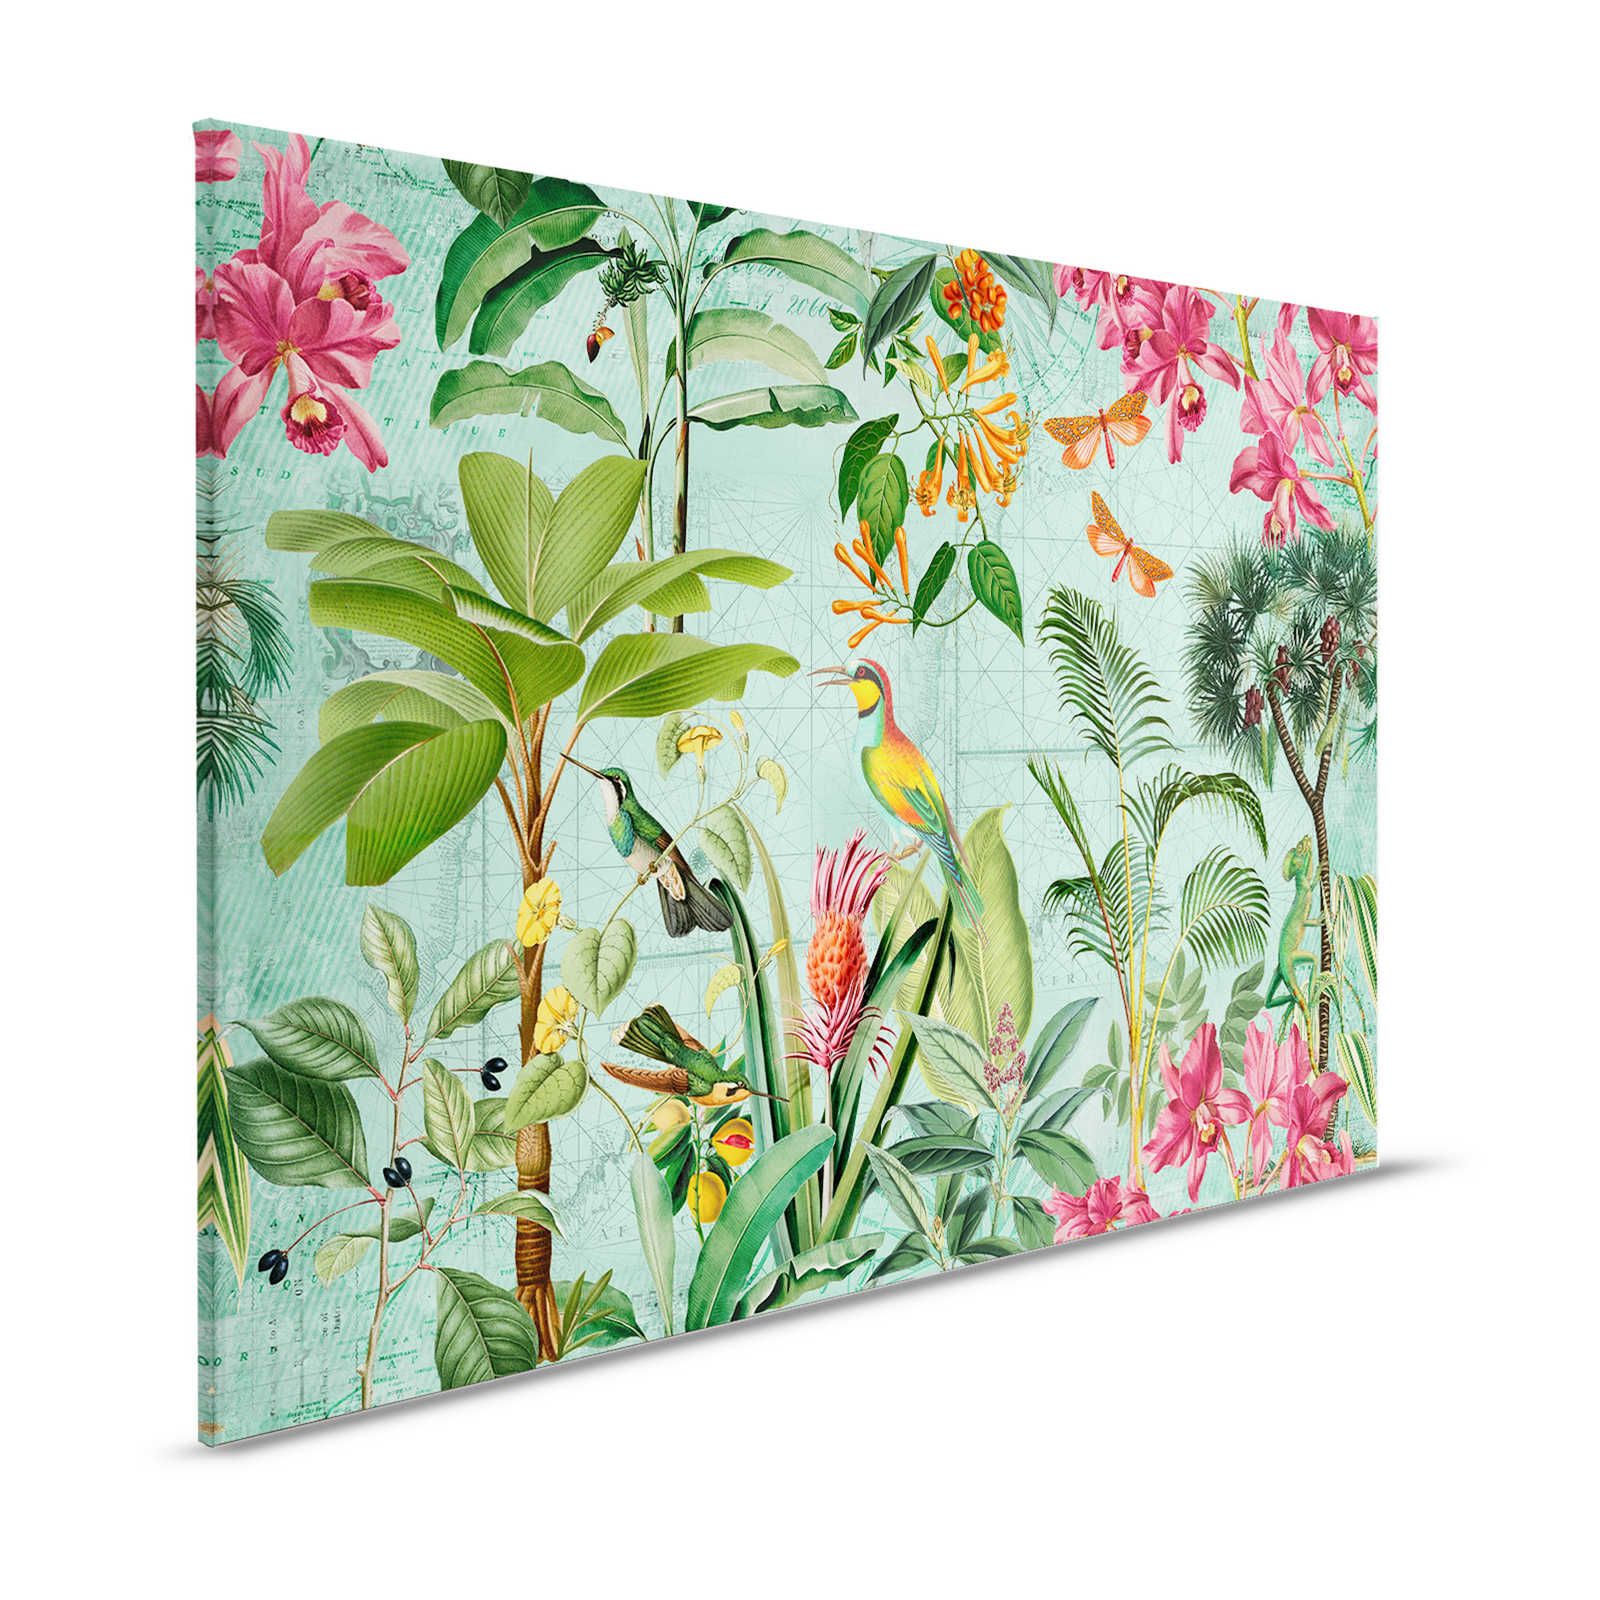 Buntes Dschungel Leinwandbild mit Bäumen, Blüten & Tieren – 1,20 m x 0,80 m
